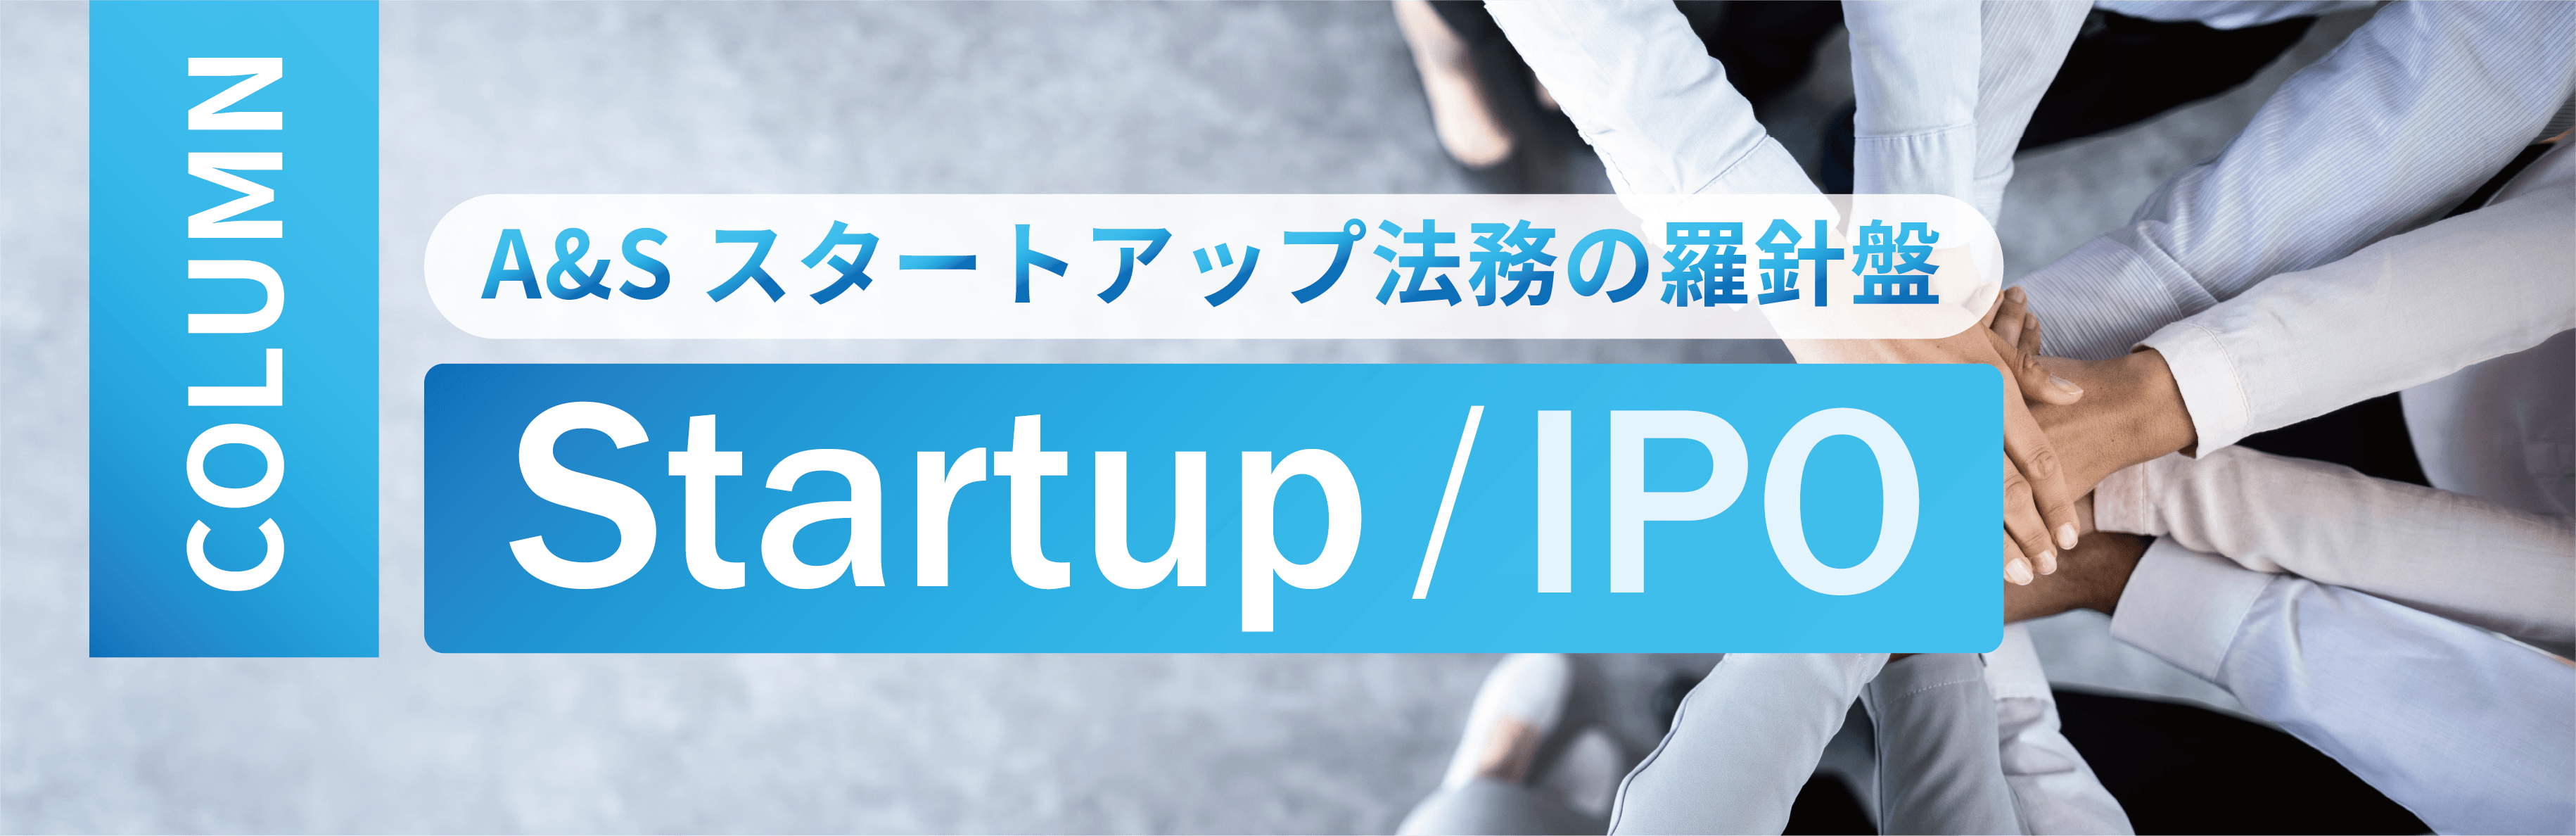 header-startupipocolumn.png